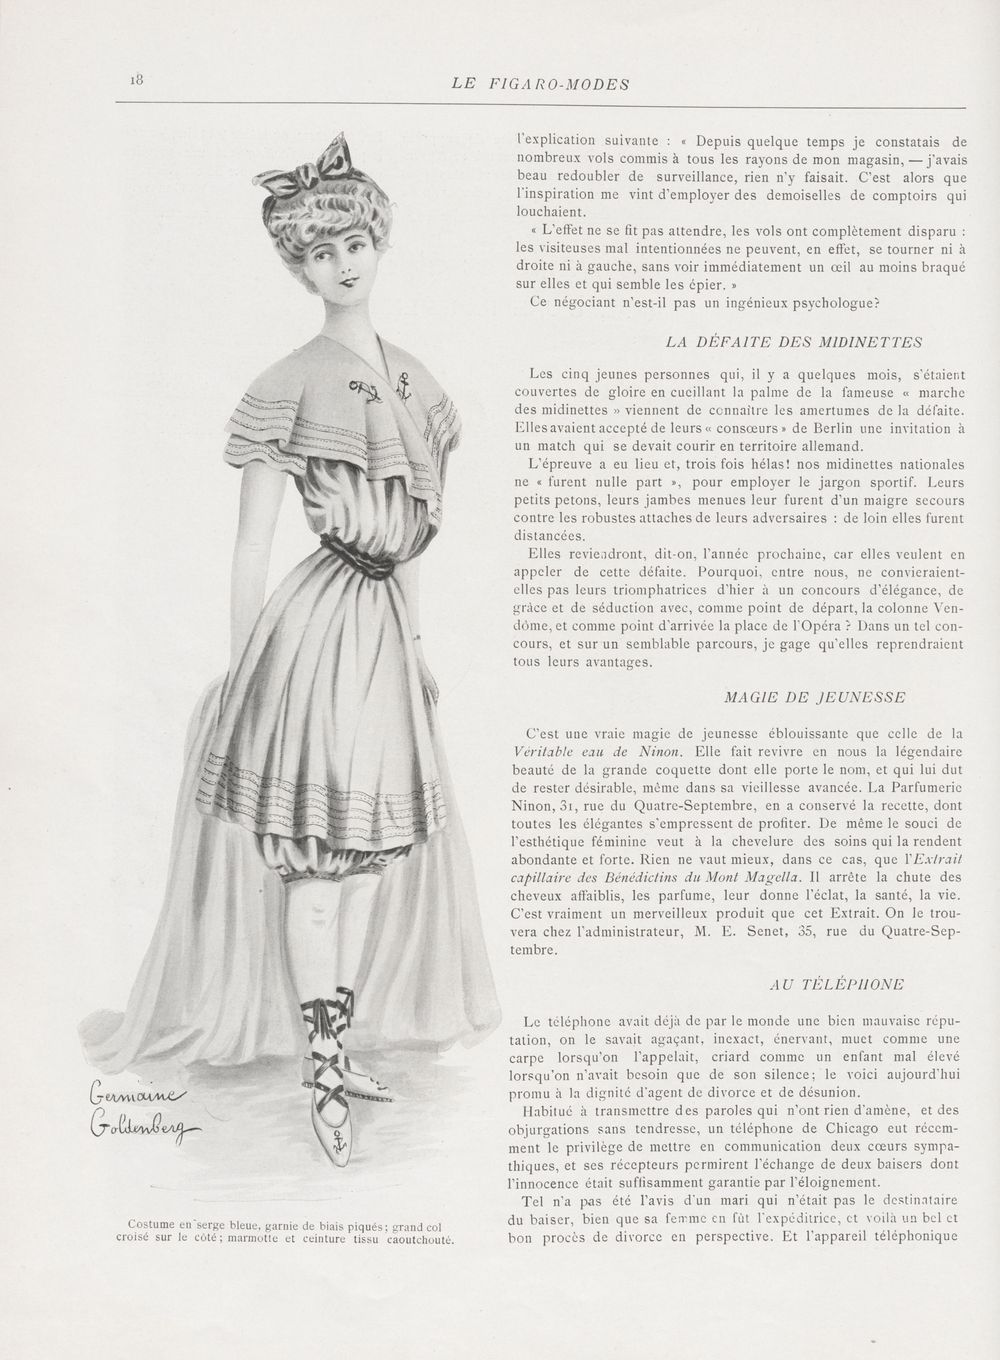 Costume de bain en serge, signé Germain Goldenberg. Figaro-Modes d'août 1904 (www.gallica.bnf.fr)